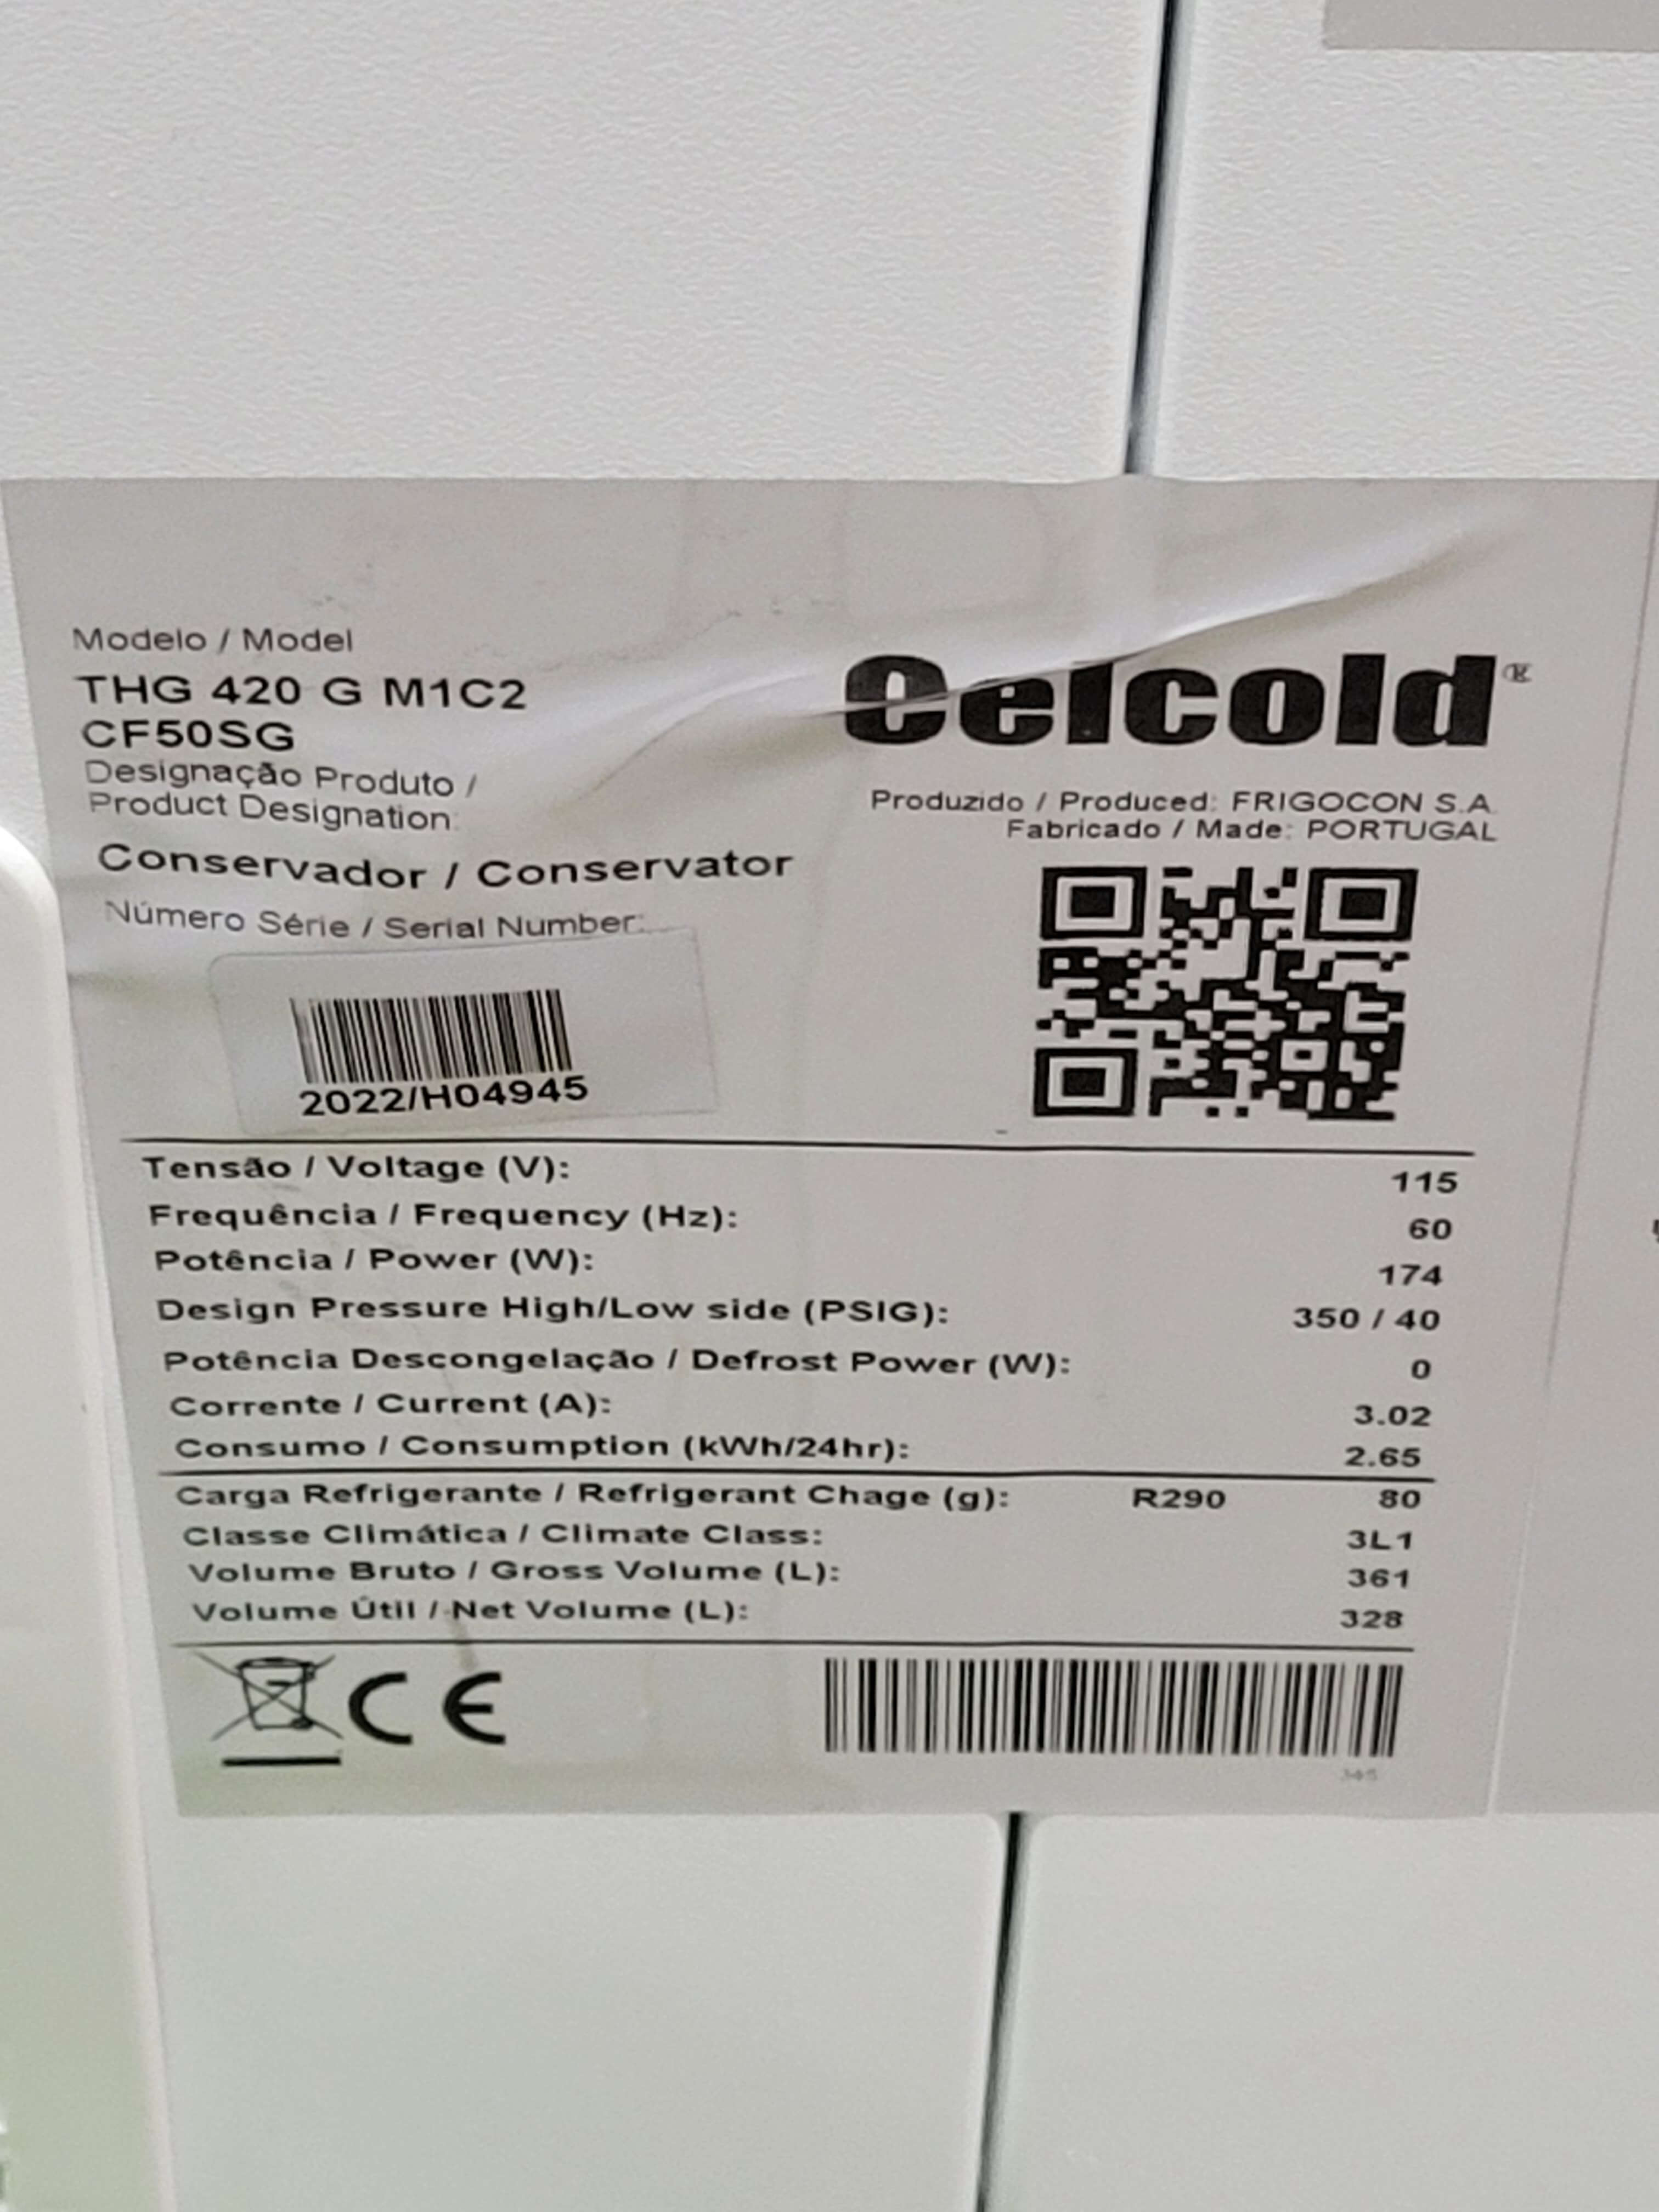 Thumbnail - Celcold CF50SG Display Freezer